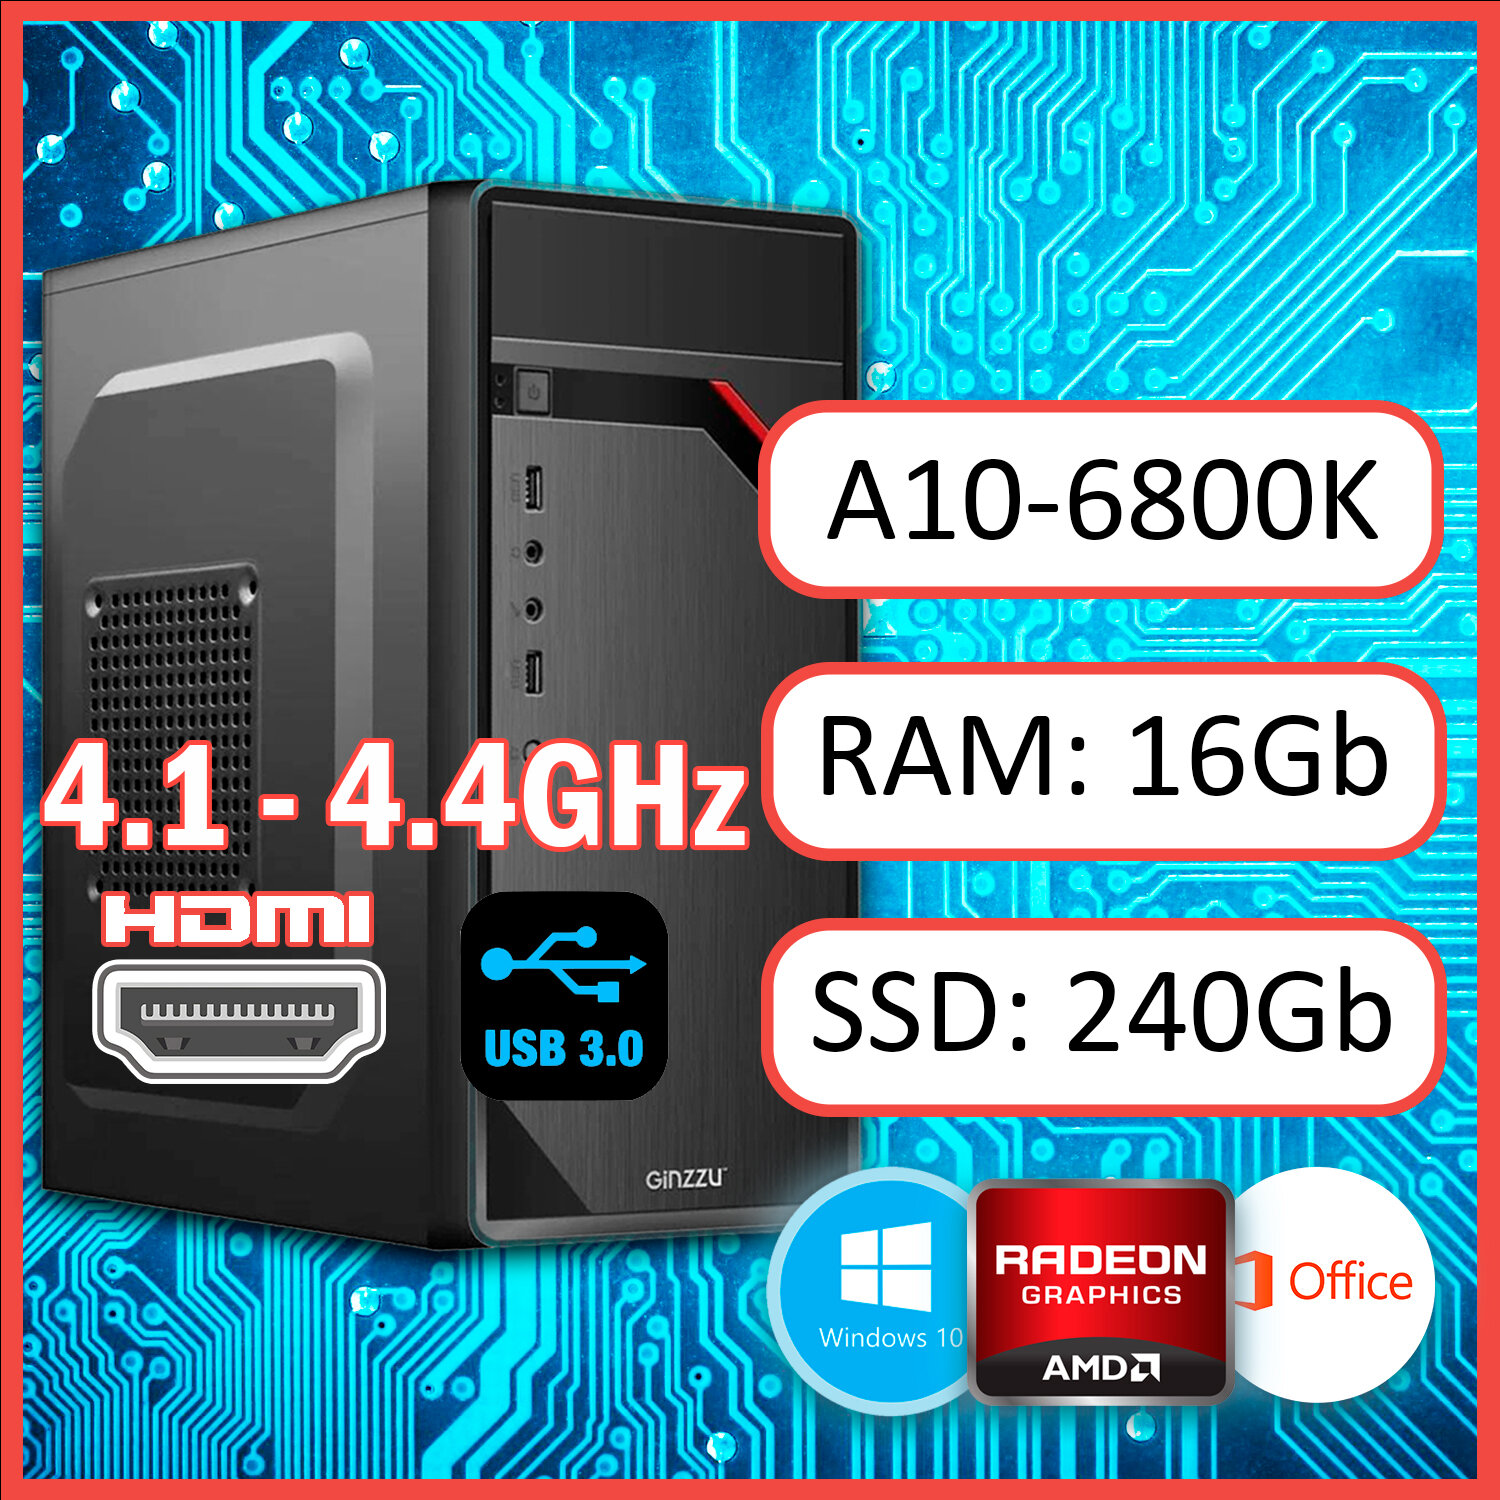 Системный блок AMD A10-6800K, RAM 16 Gb, SSD 240 Gb, AMD Radeon HD 8670D, Windows 10Pro